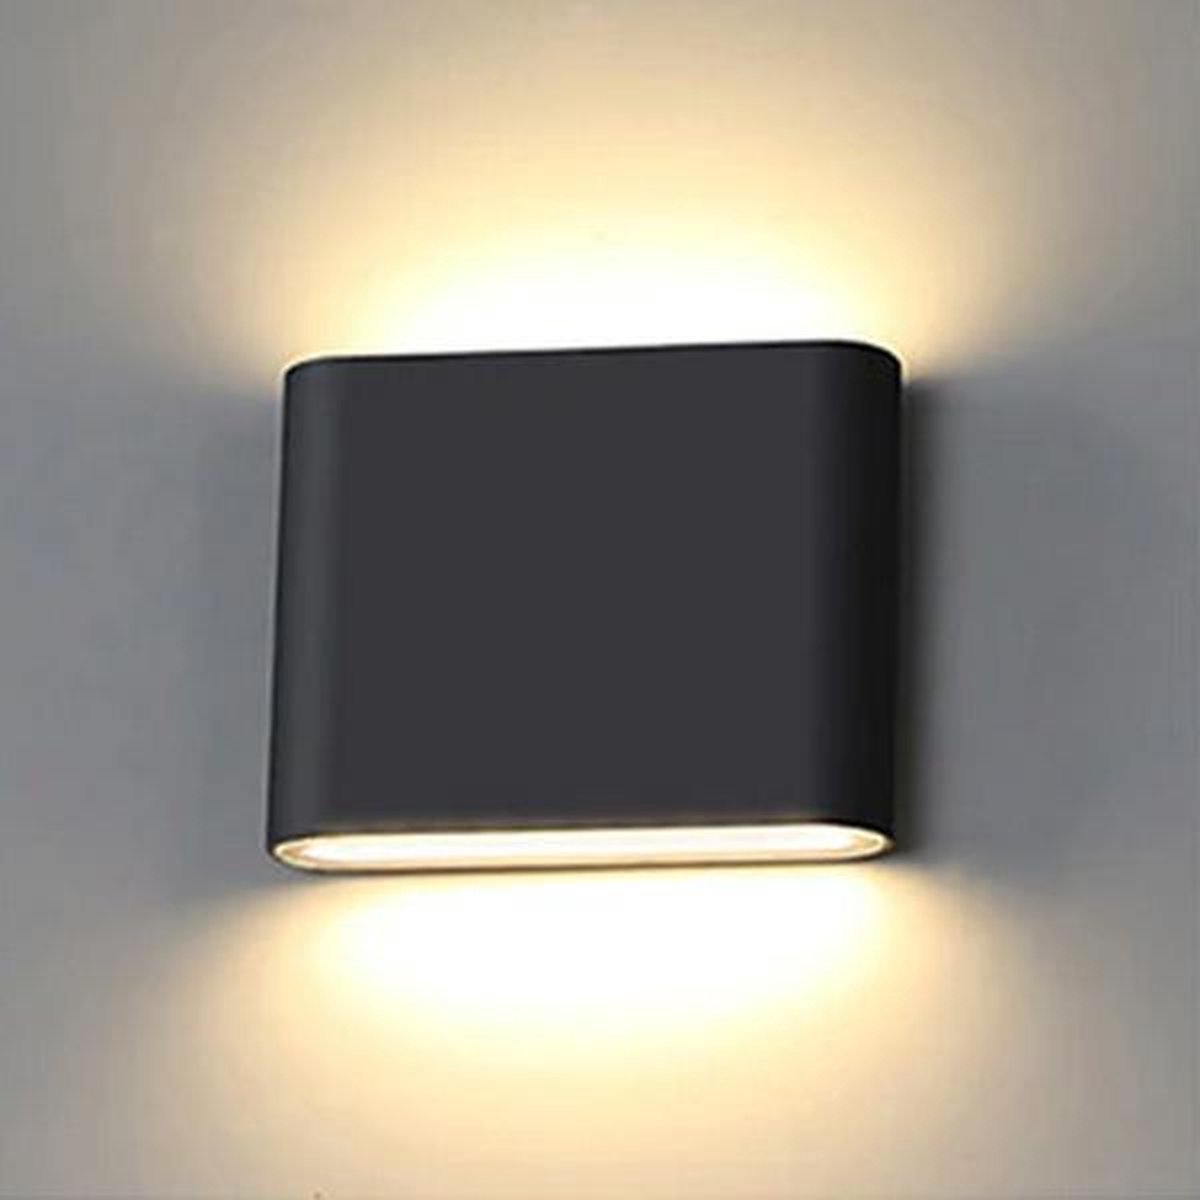 Vtw Living - LED Wandlamp - Buitenverlichting - Binnen - Terrasverlichting - Zwart